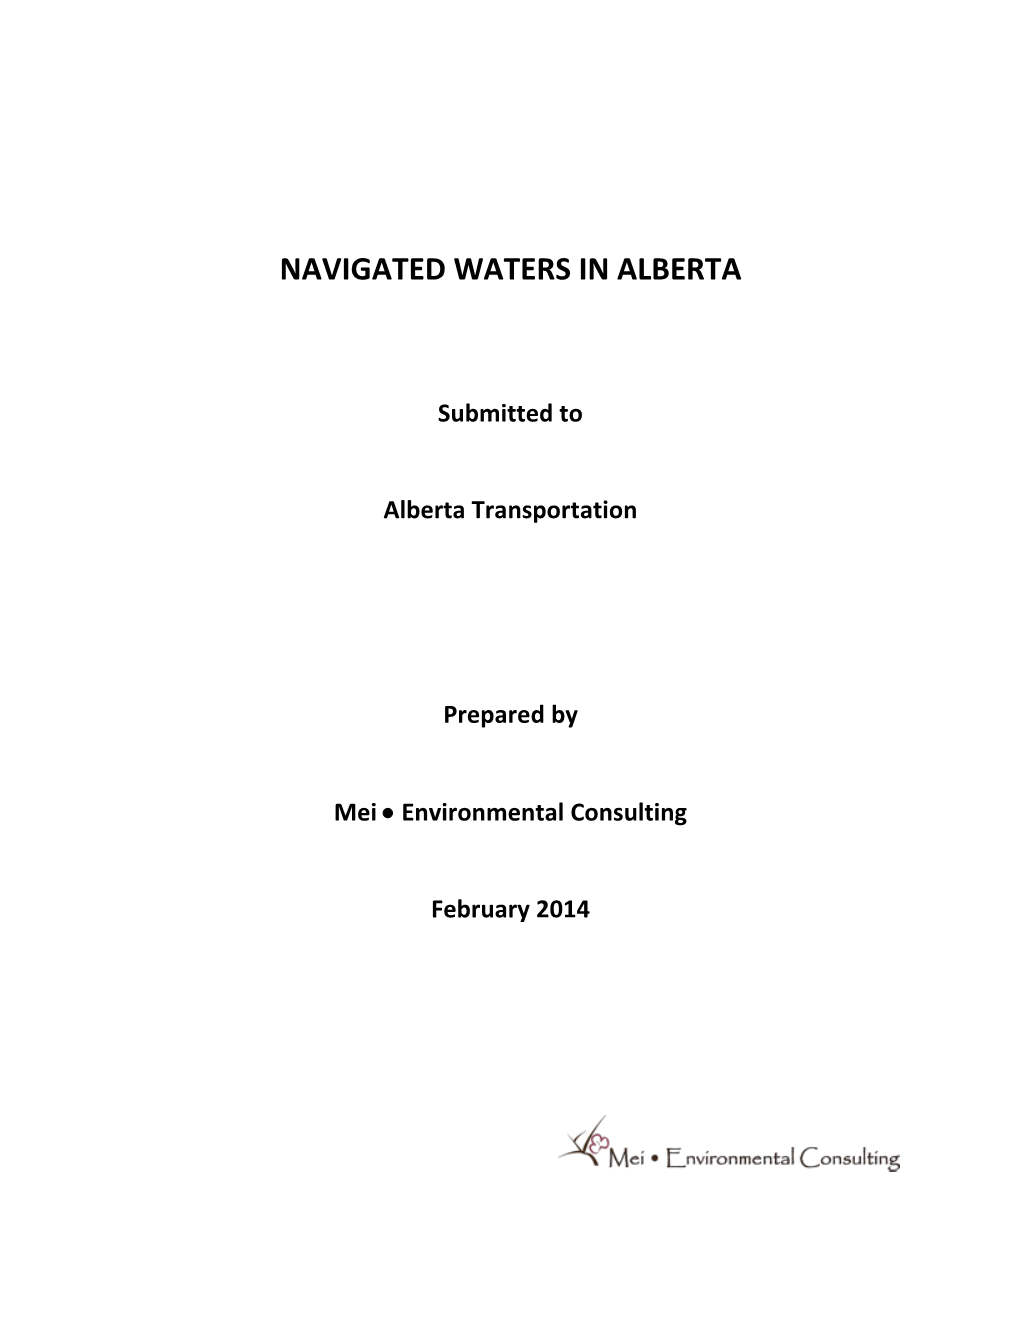 Navigated Waters in Alberta